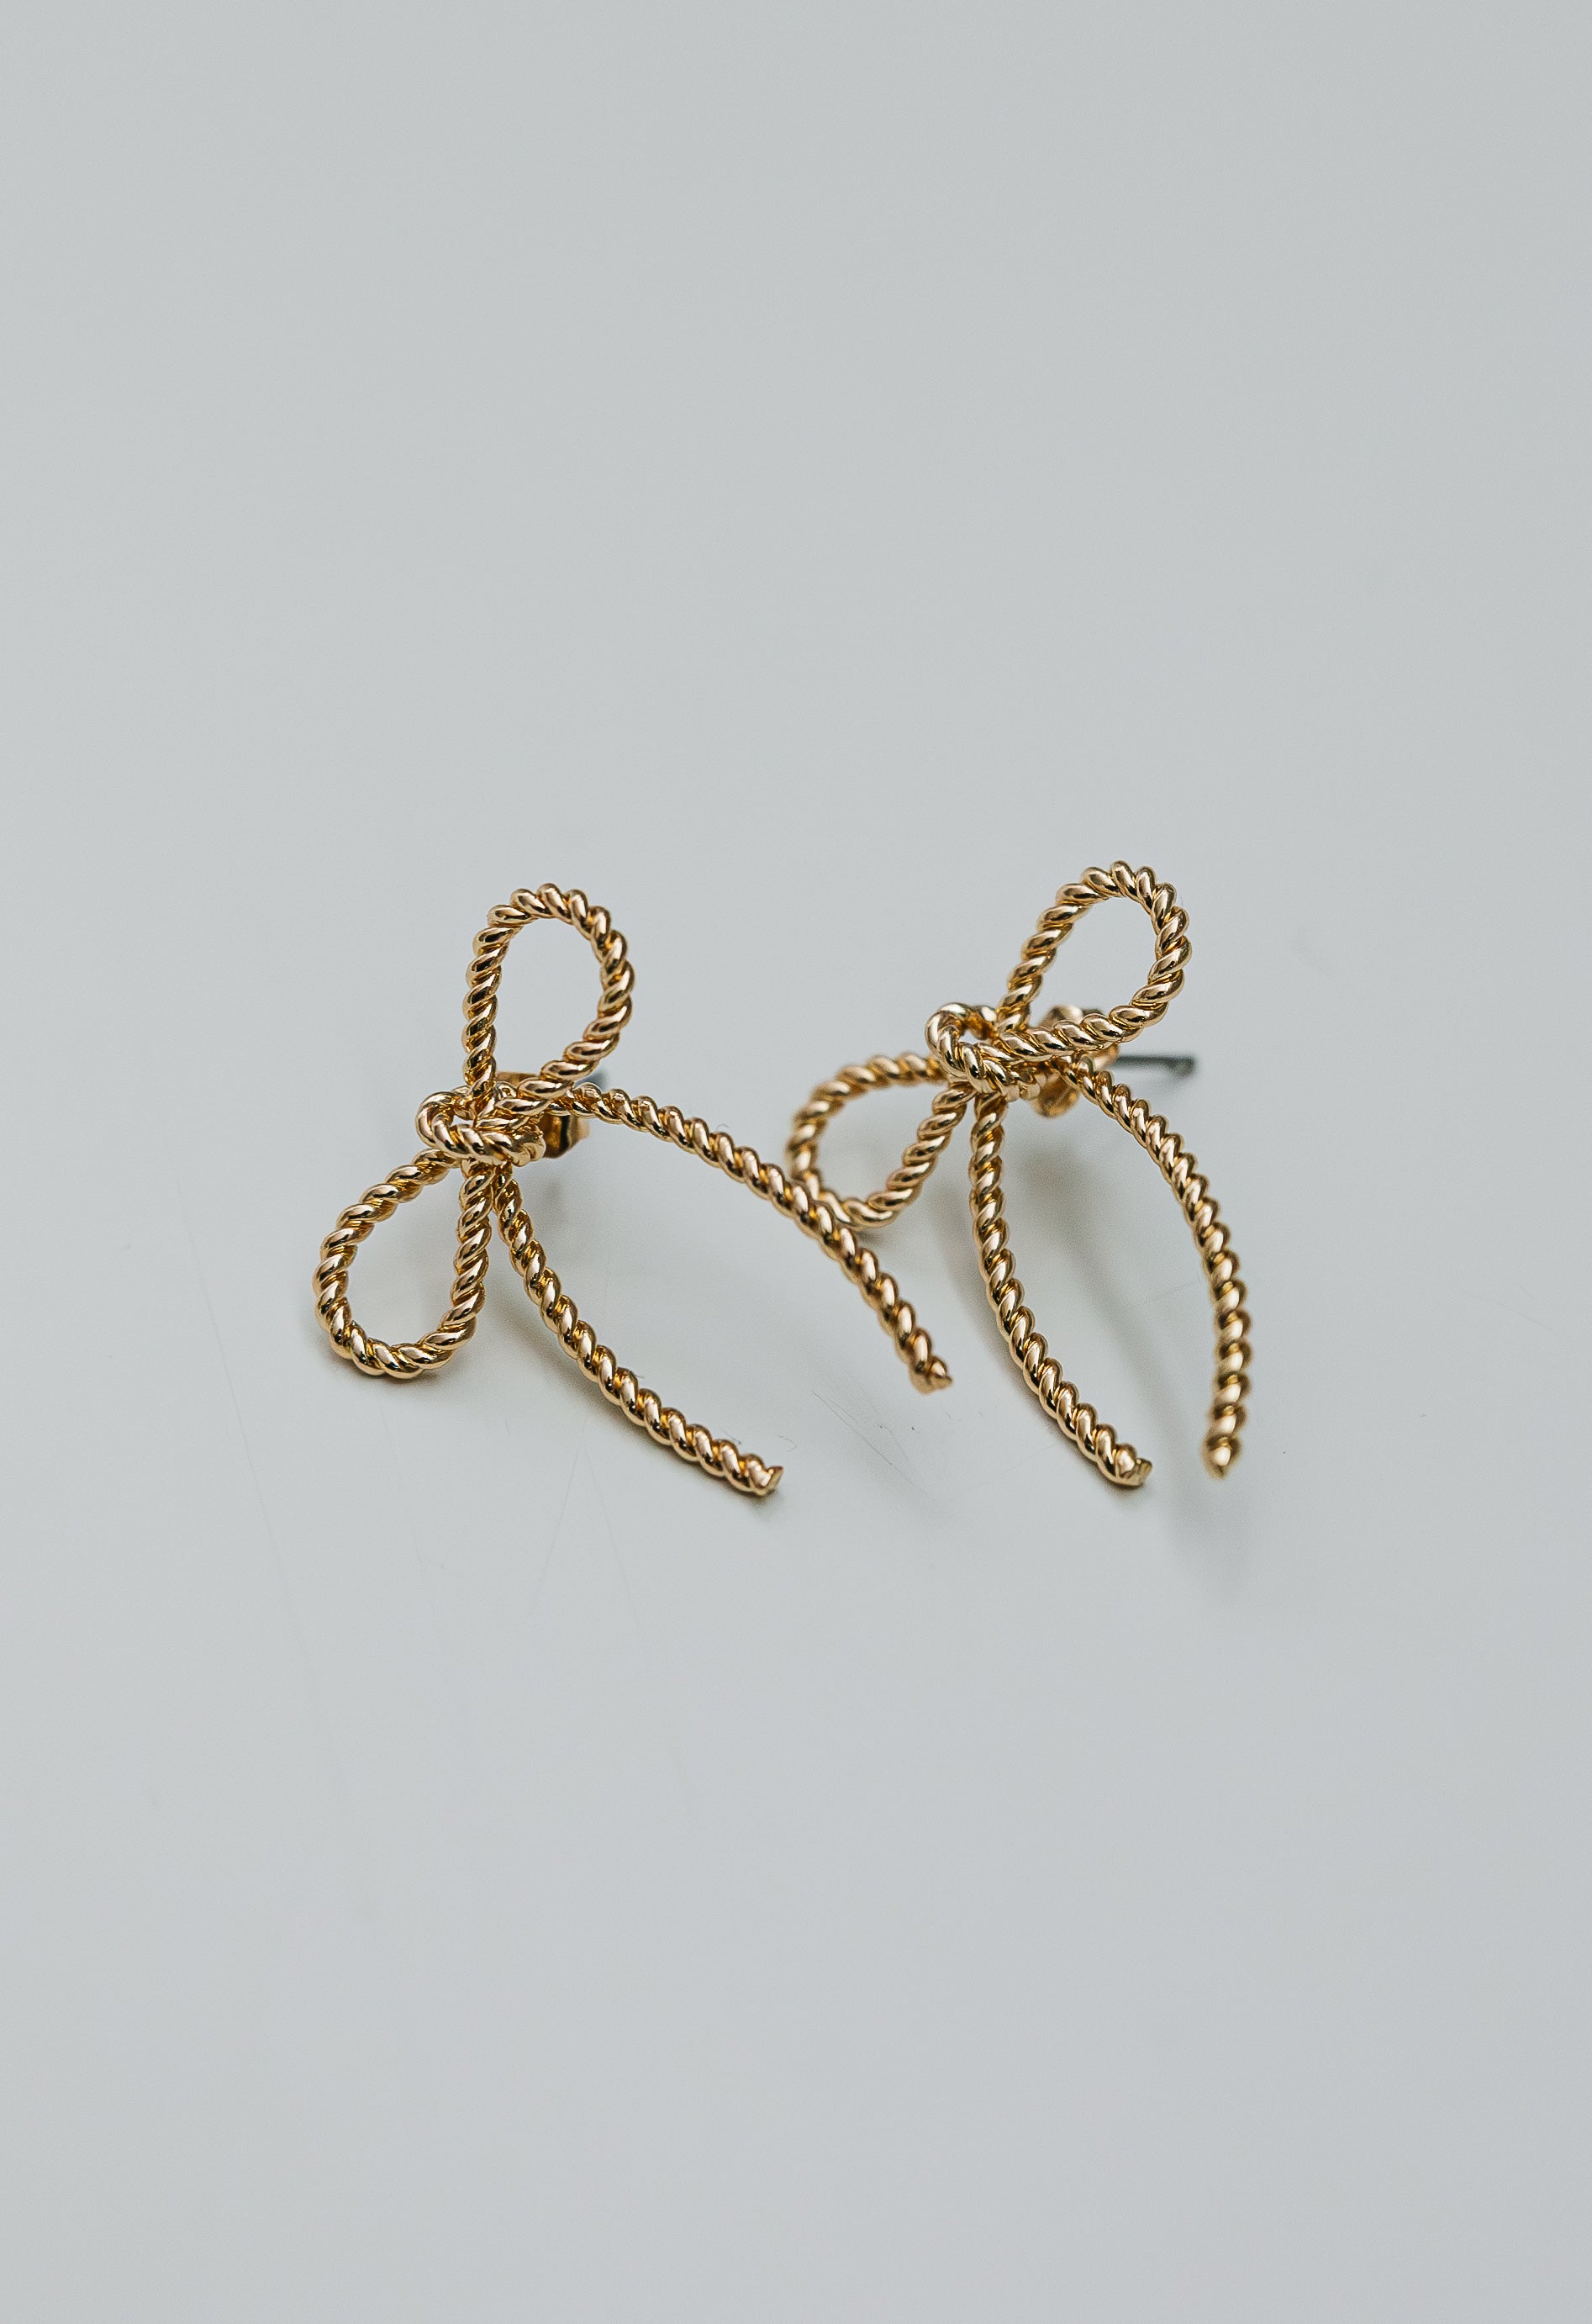 Dollette Earrings - GOLD - willows clothing Earrings